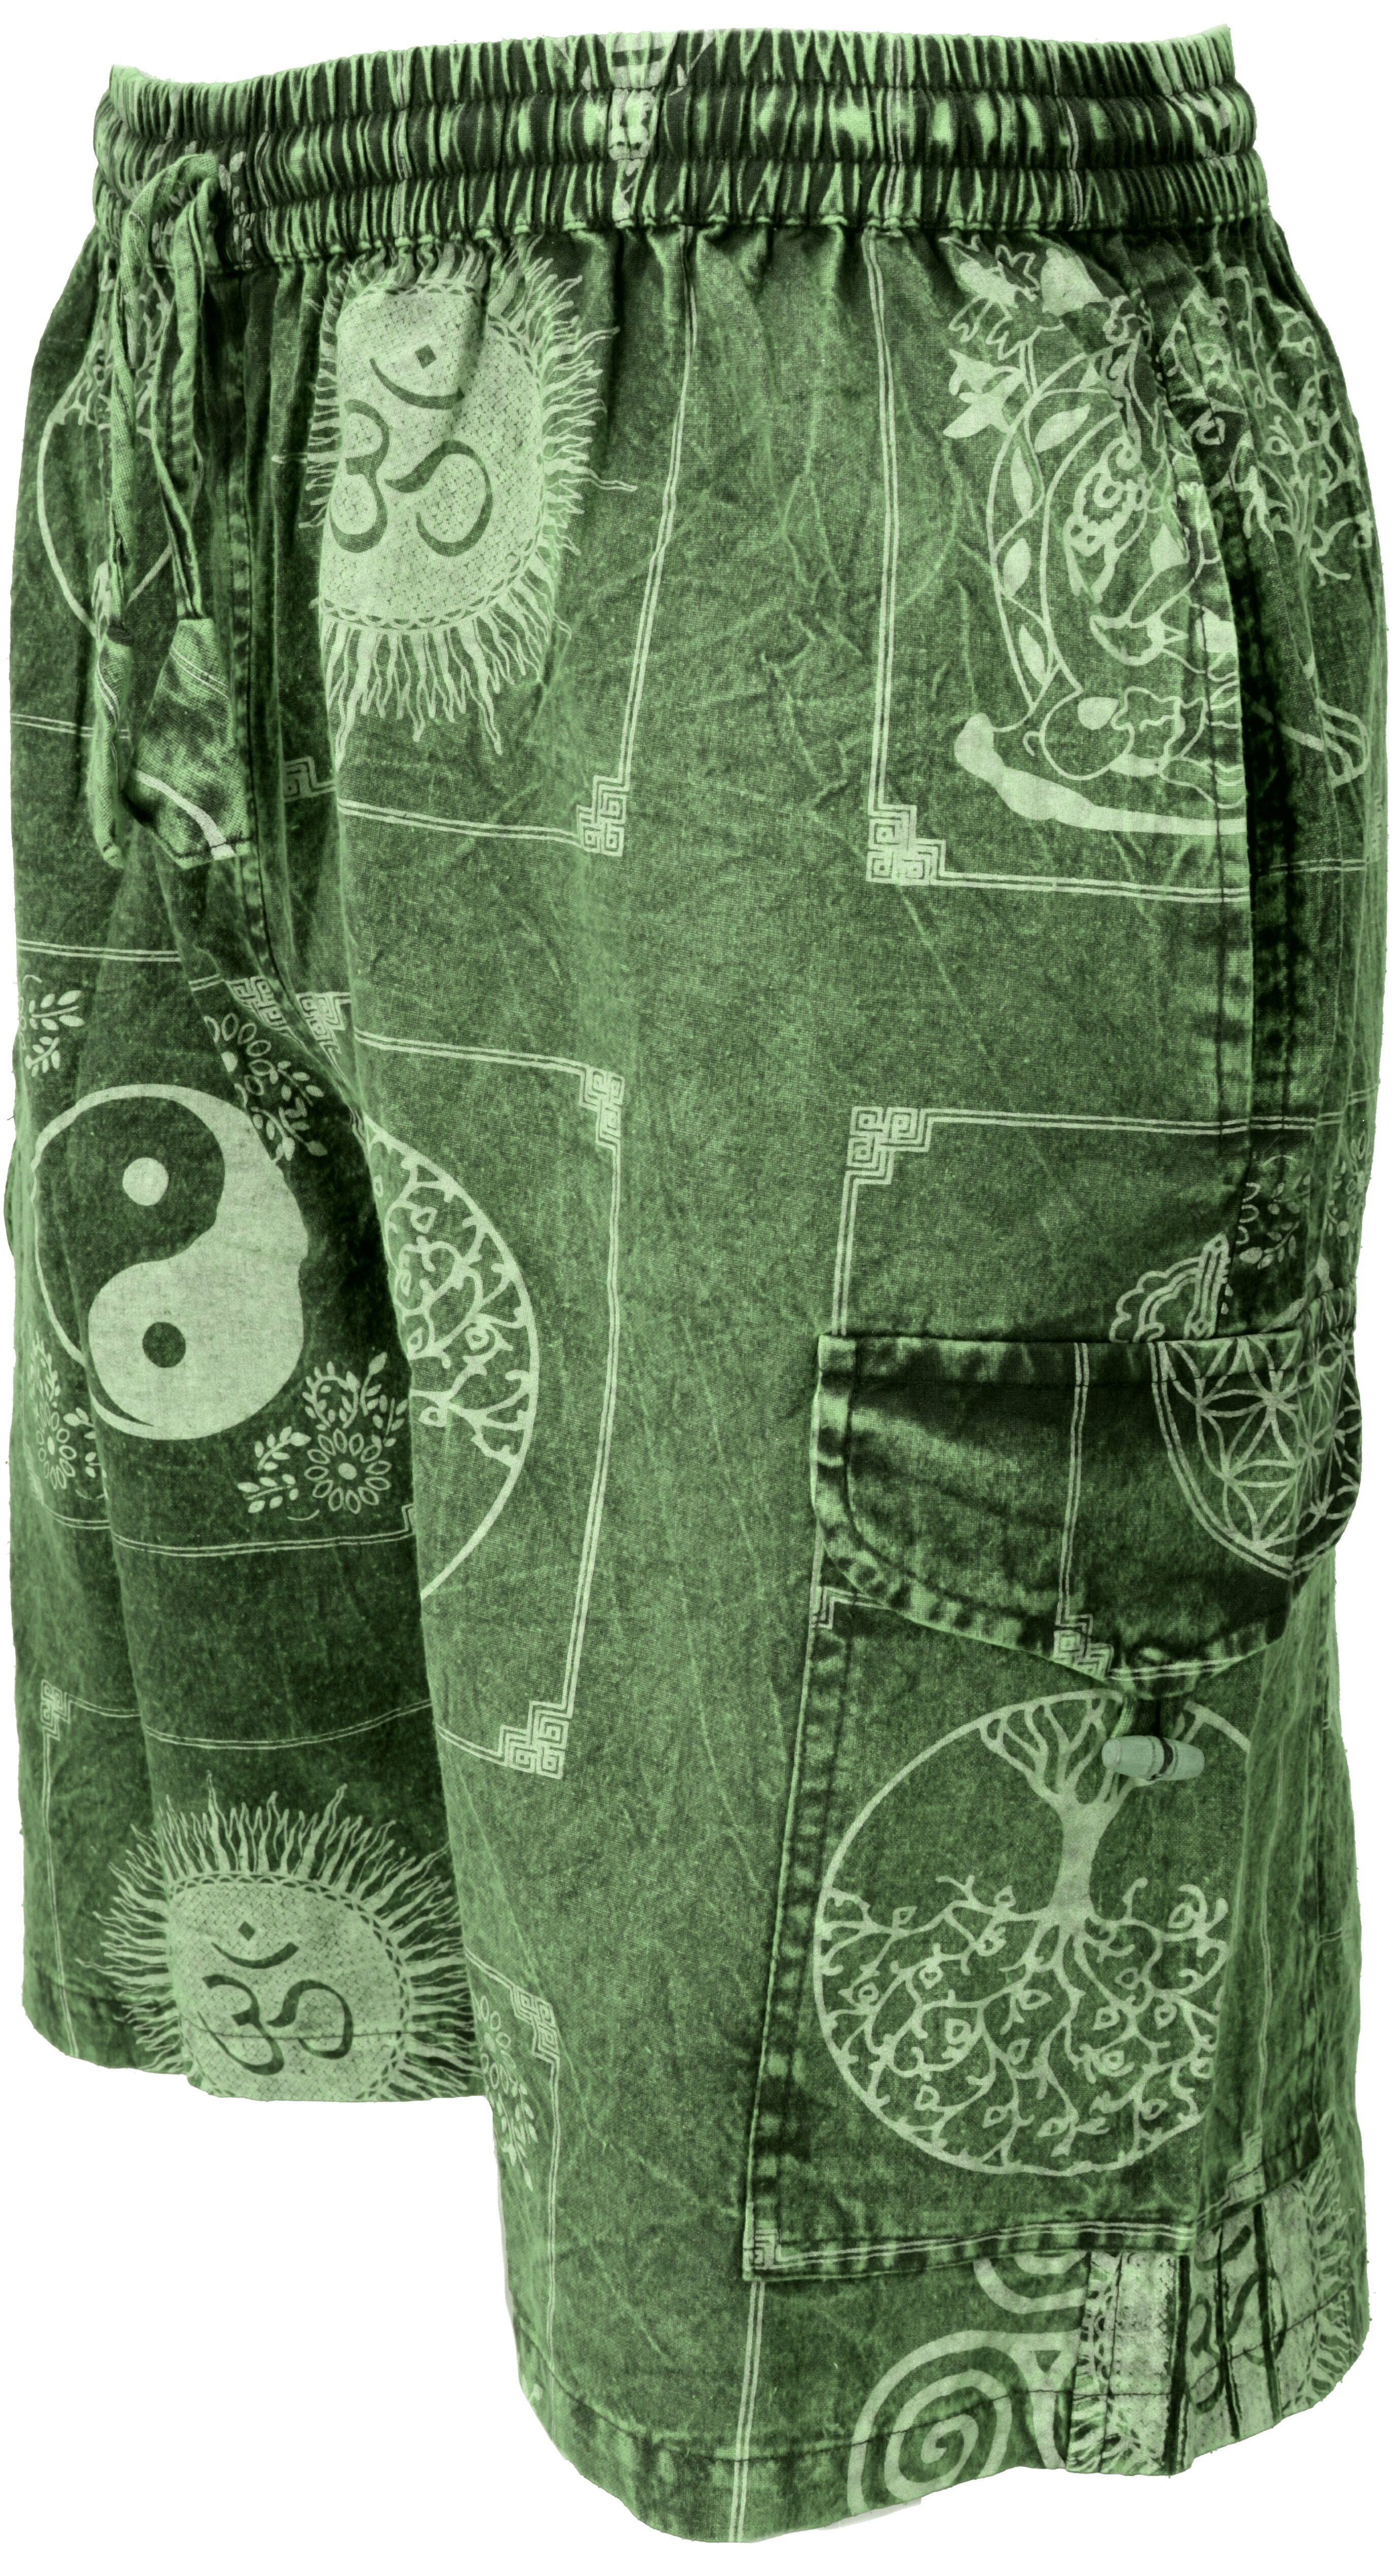 Guru-Shop Relaxhose Ethno Yogashorts, aus Shorts Style, Ethno Bekleidung Nepal Hippie, grün stonewash alternative 